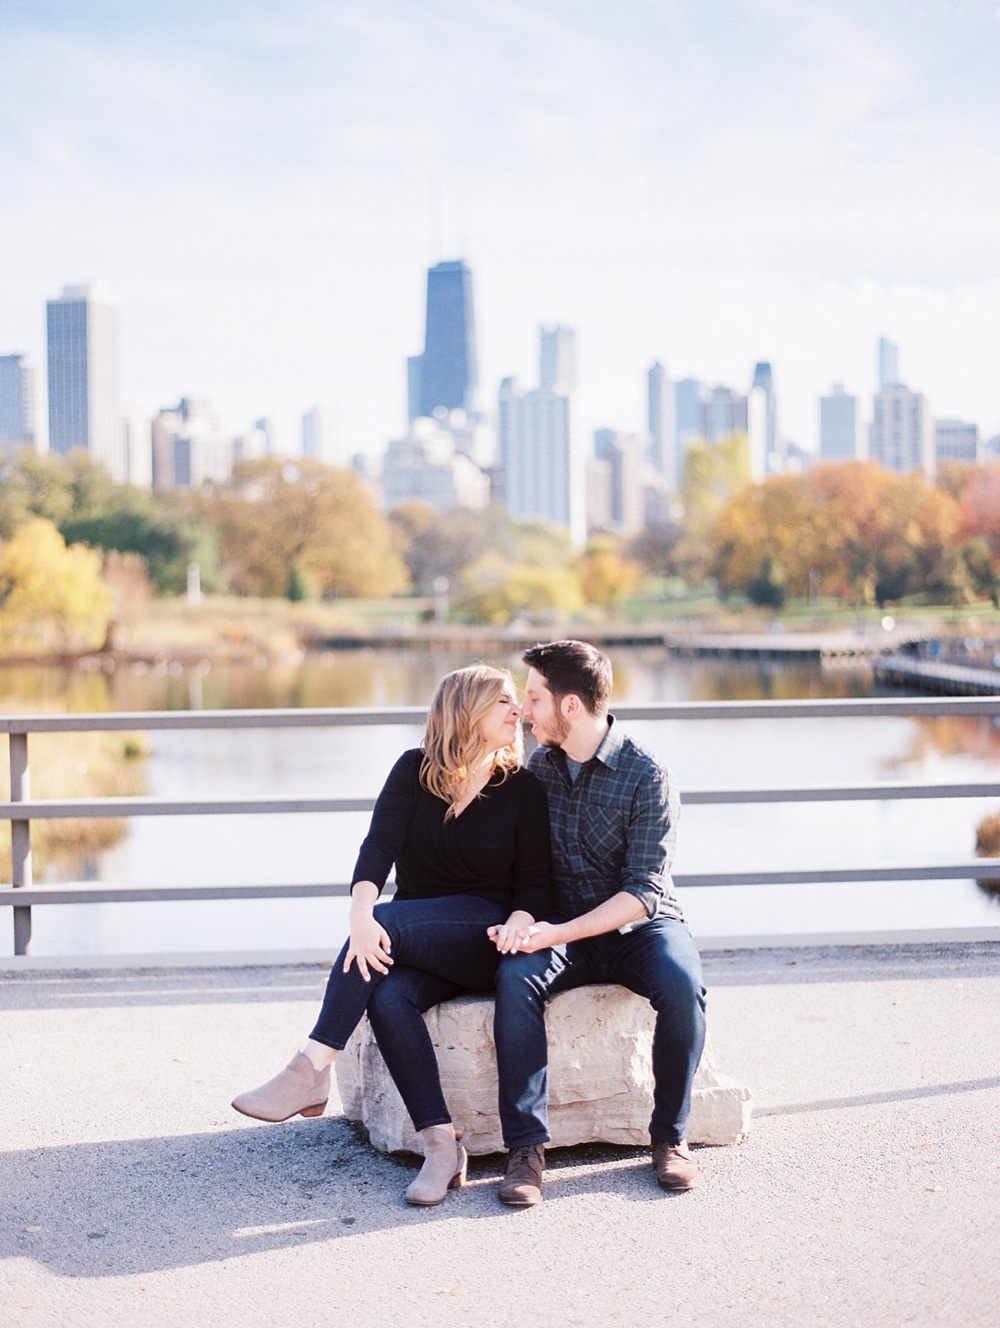 Kristin-La-Voie-Photography-Chicago-Wedding-Photographer-South-Pond-Dog-Engagement-Lincoln-Park-17